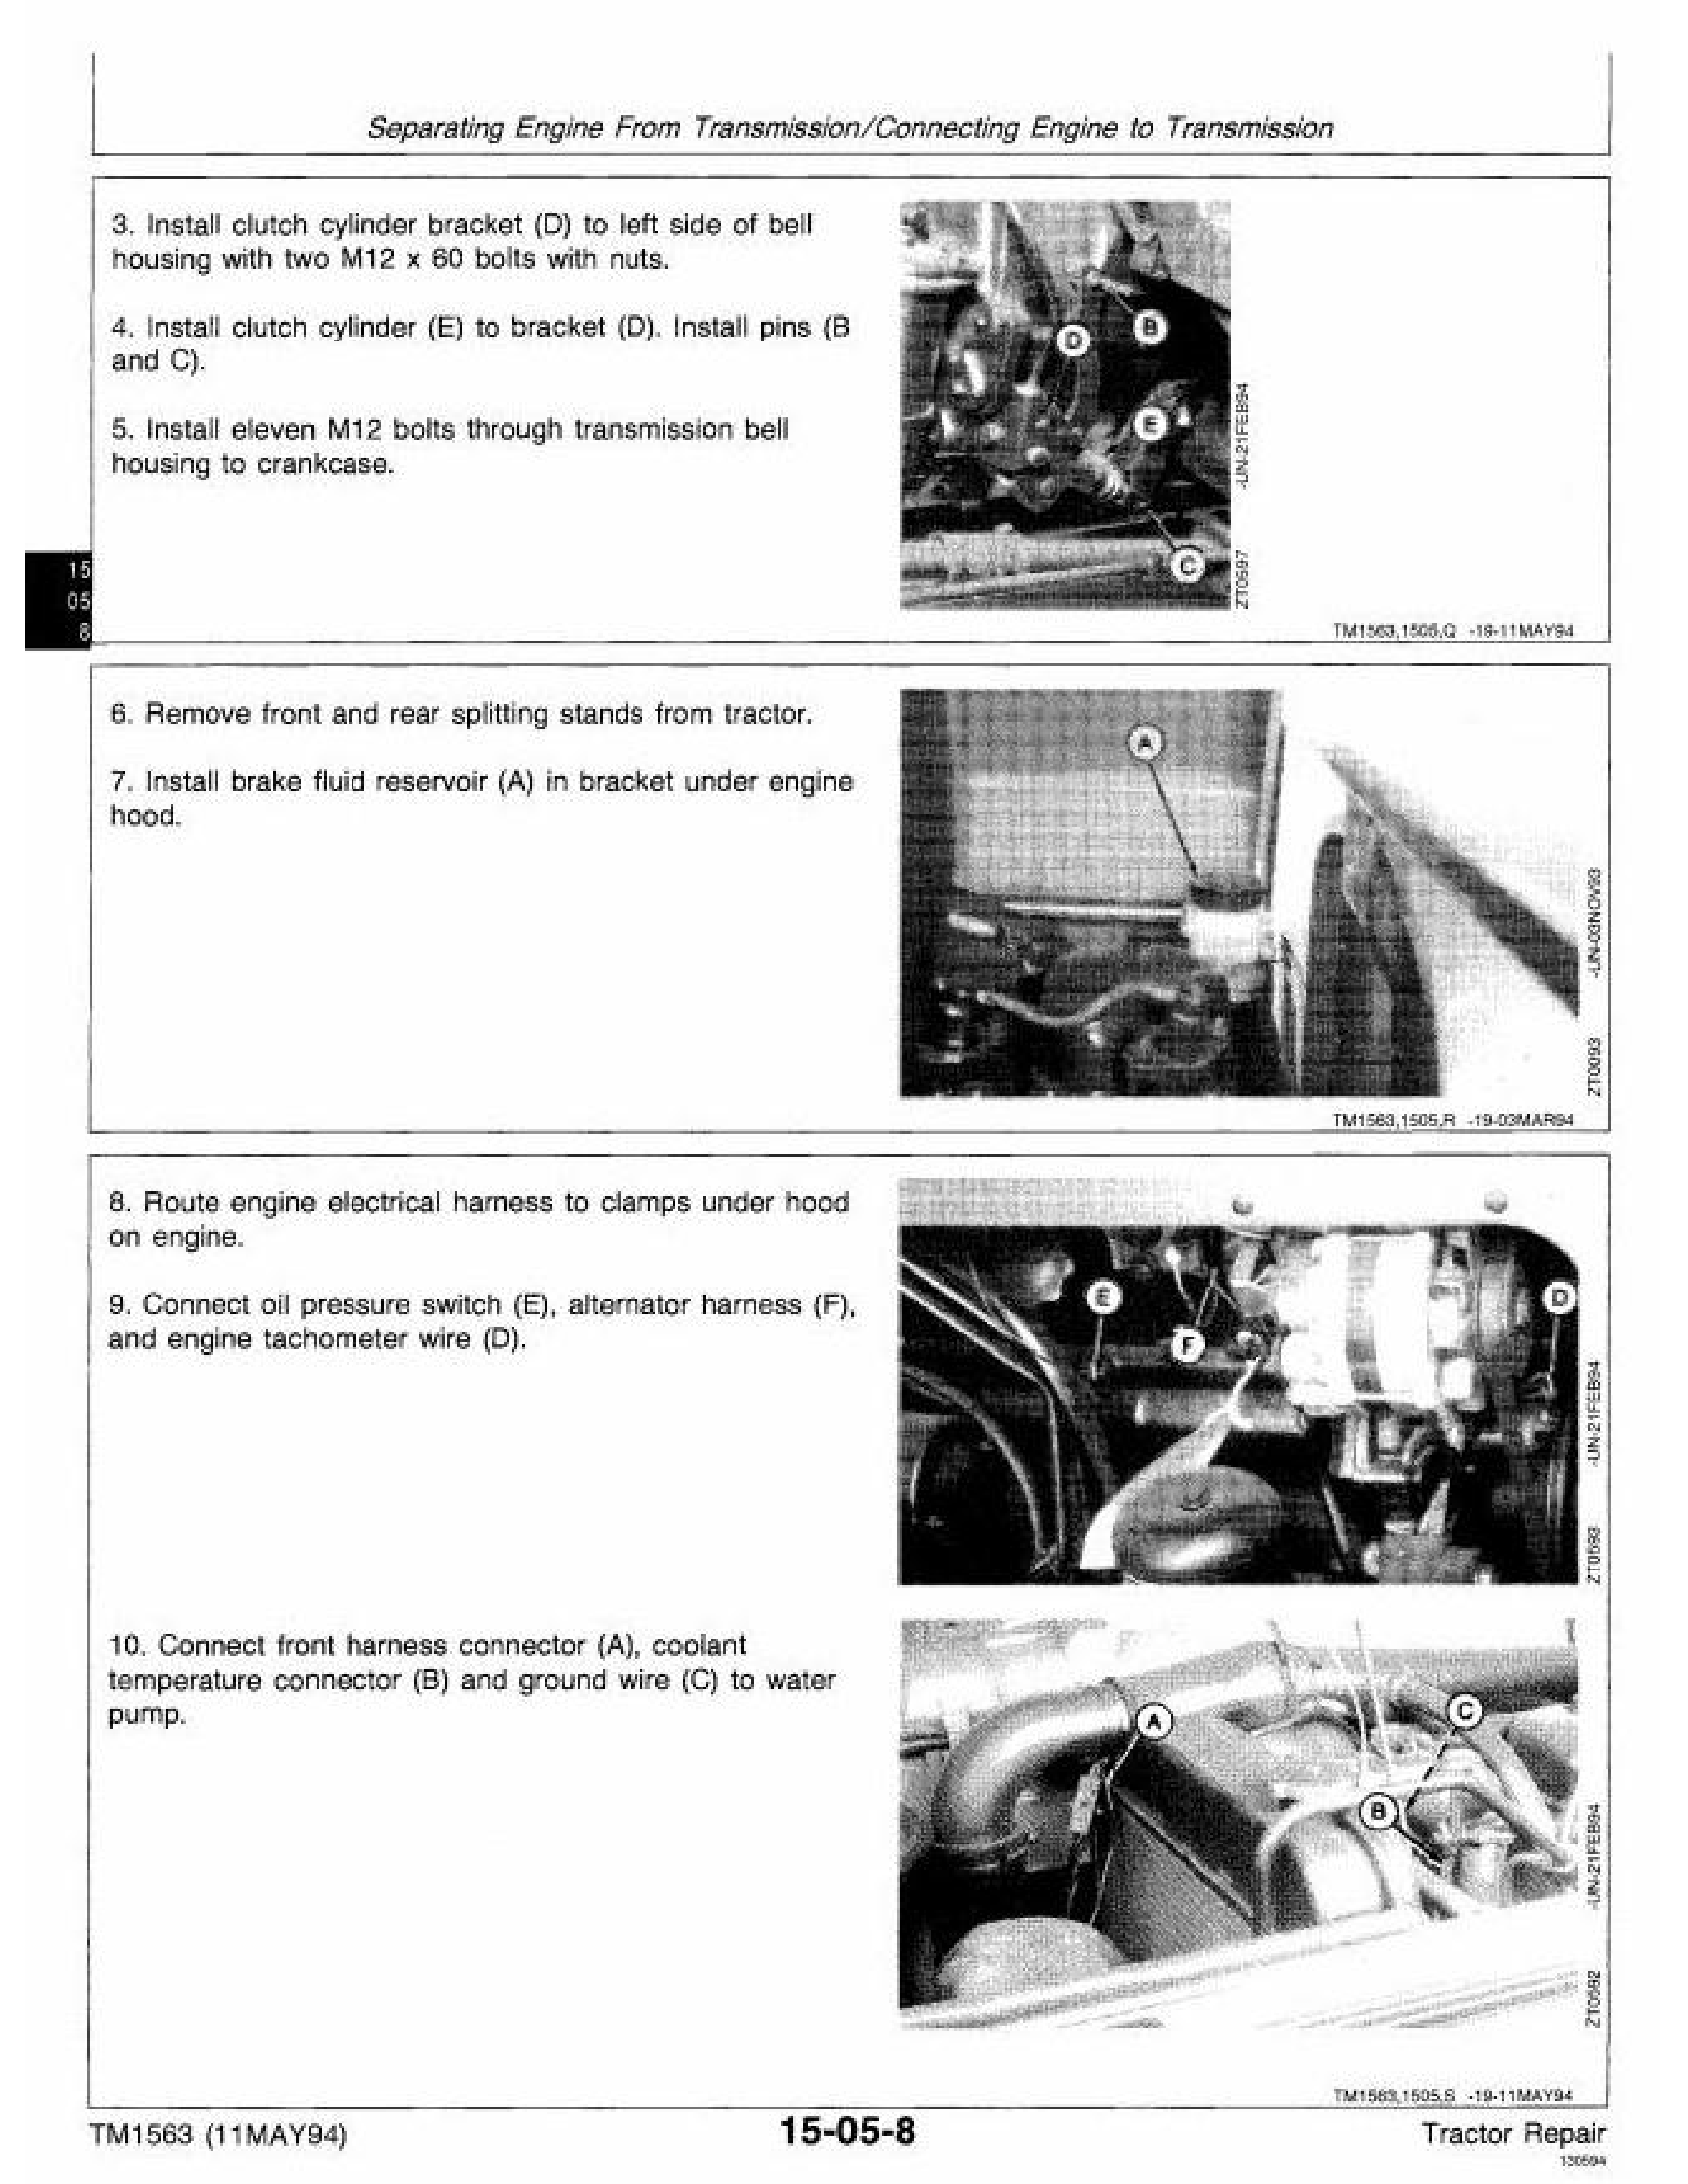 John Deere 762B manual pdf